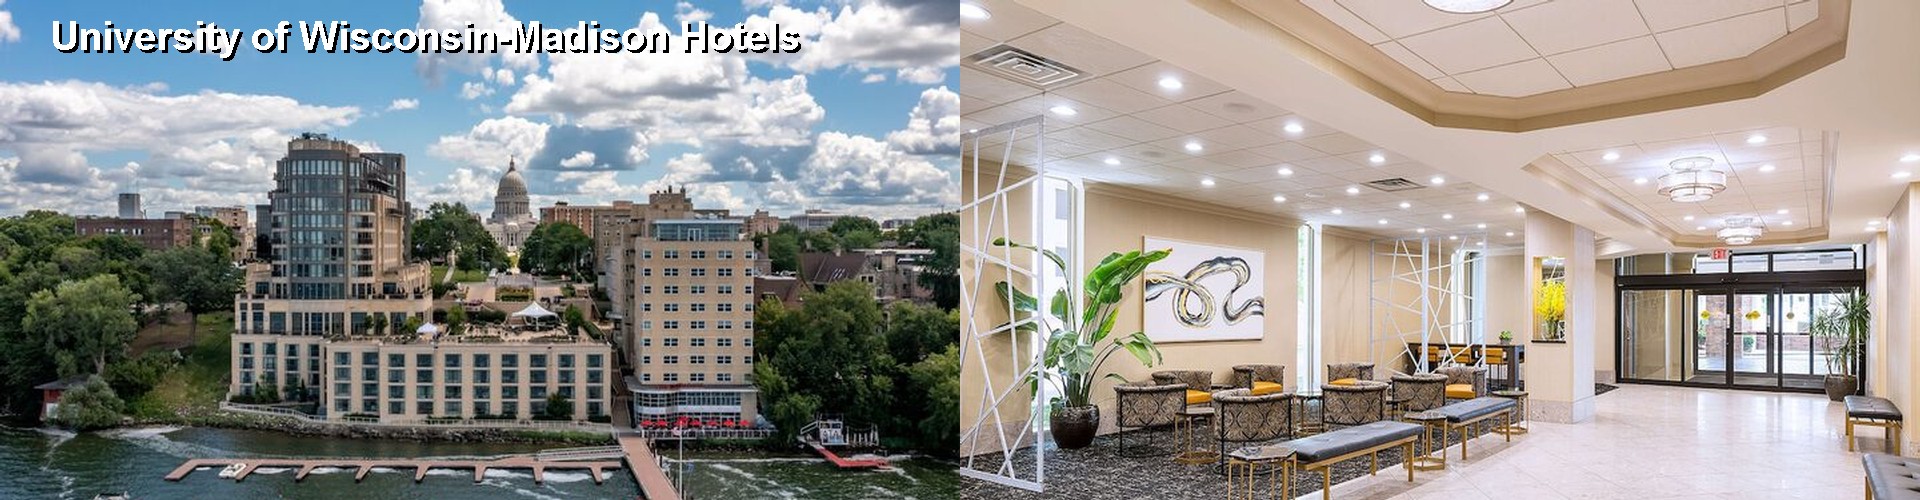 5 Best Hotels near University of Wisconsin-Madison